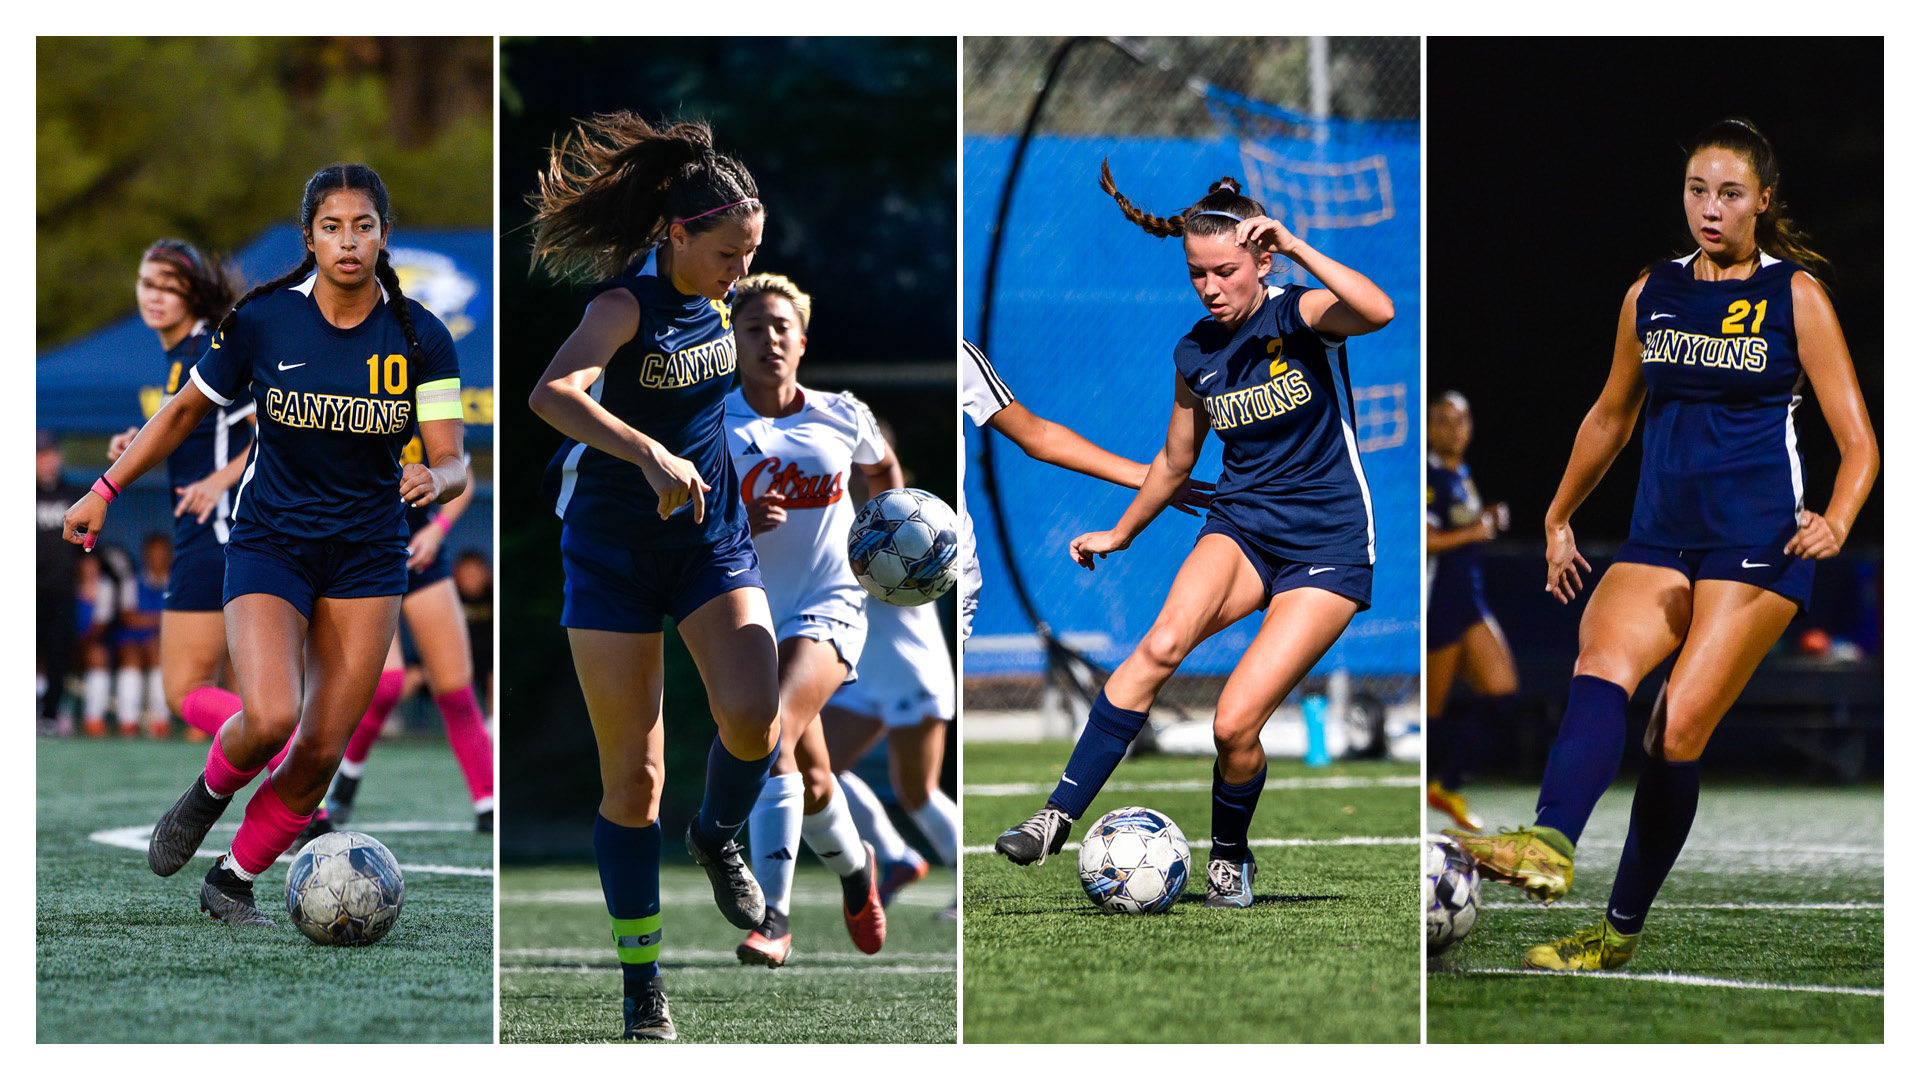 College of the Canyons women's soccer photo collage featuring players Natalia Zuluaga Ramirez, Alyssa Edards, Jessie Bonsness and Laurel Durkin.